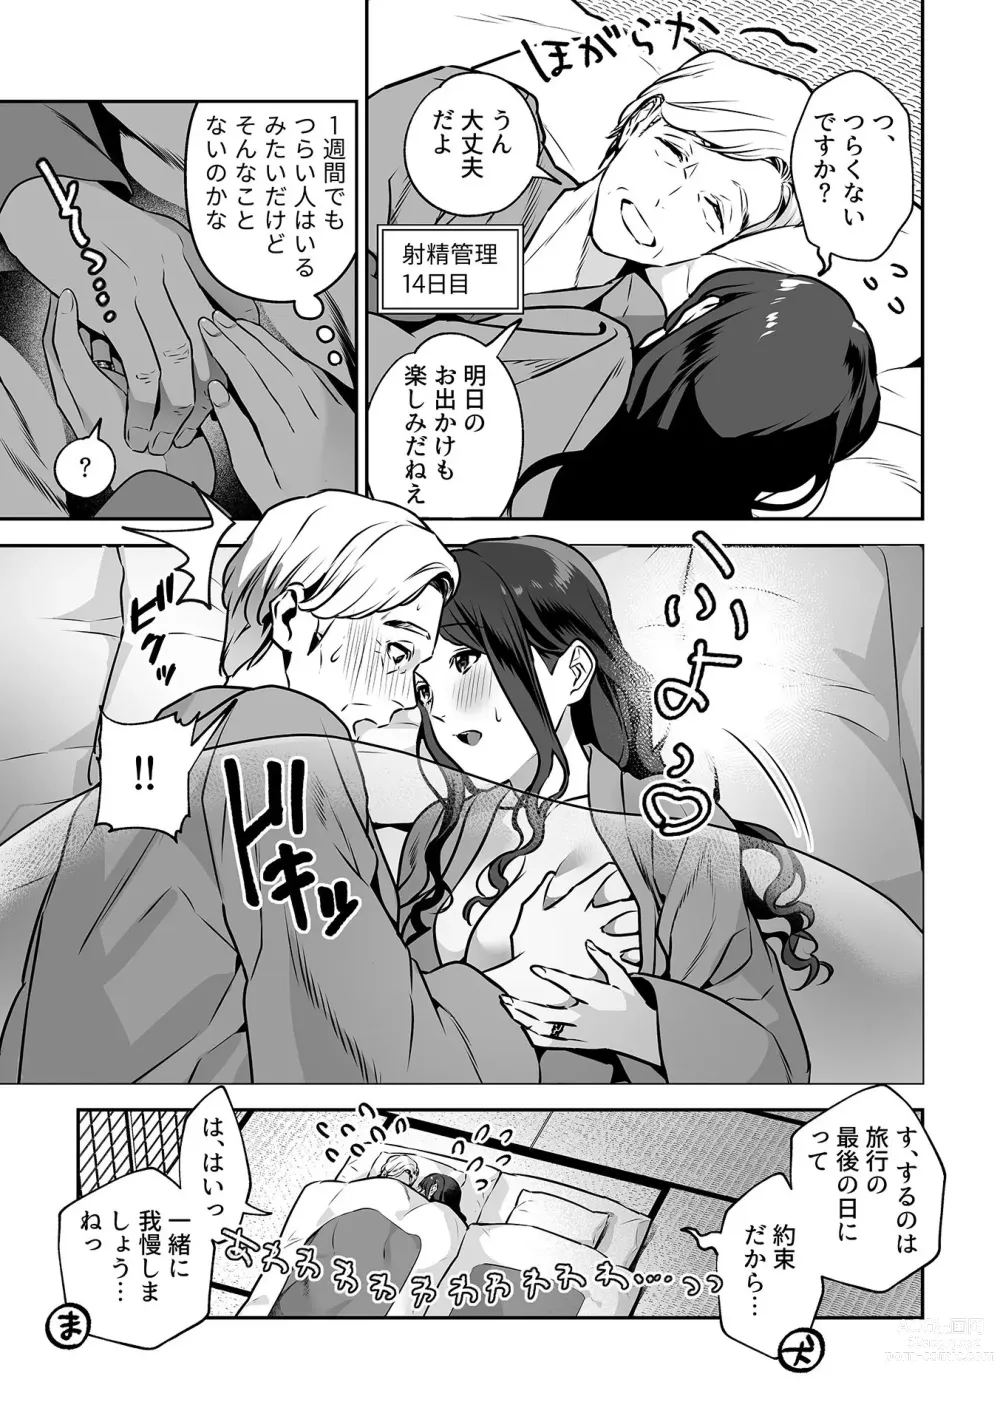 Page 151 of manga COMIC GEE vol.23